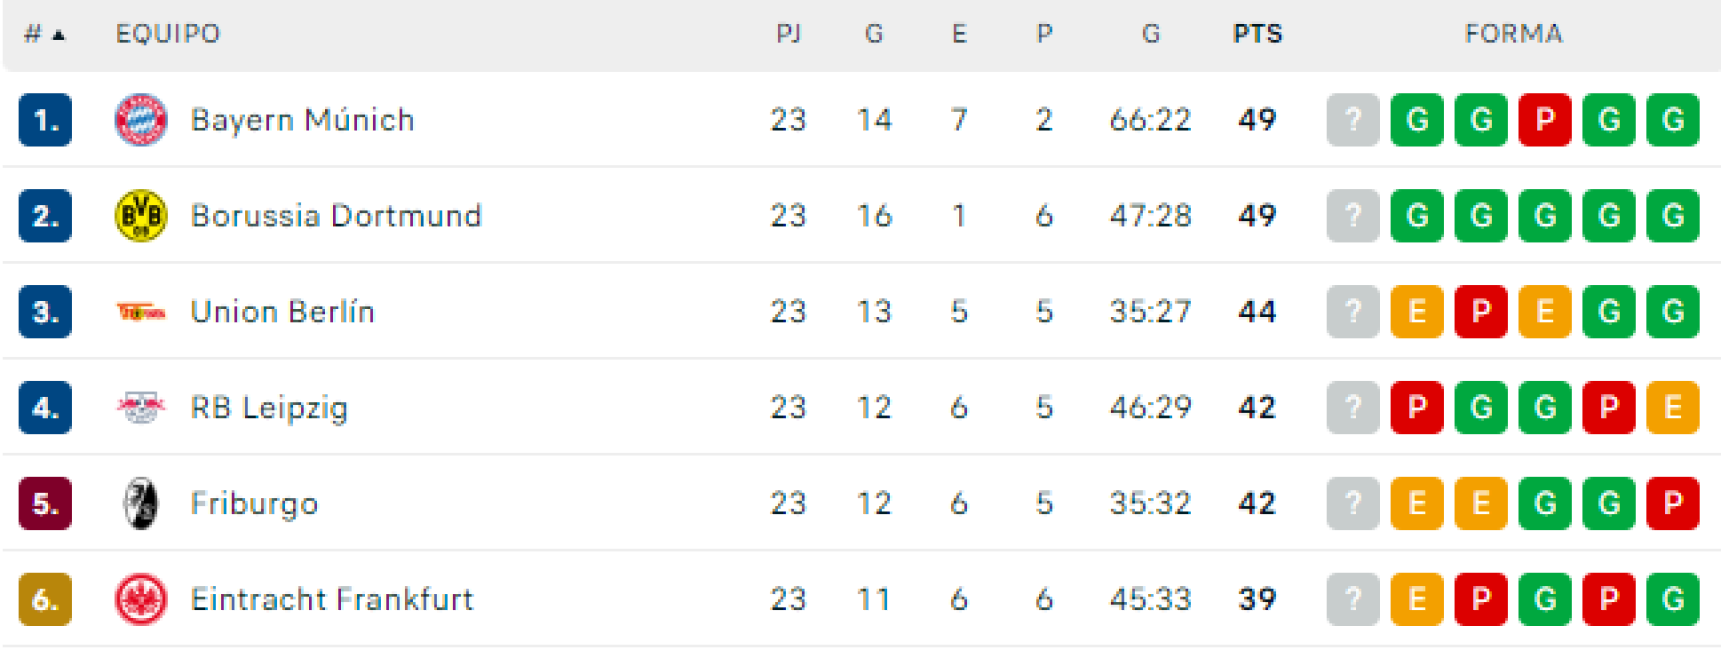 Así estaba la tabla clasificatoria de la Bundesliga a falta de once jornadas. / Fuente: FlashScore